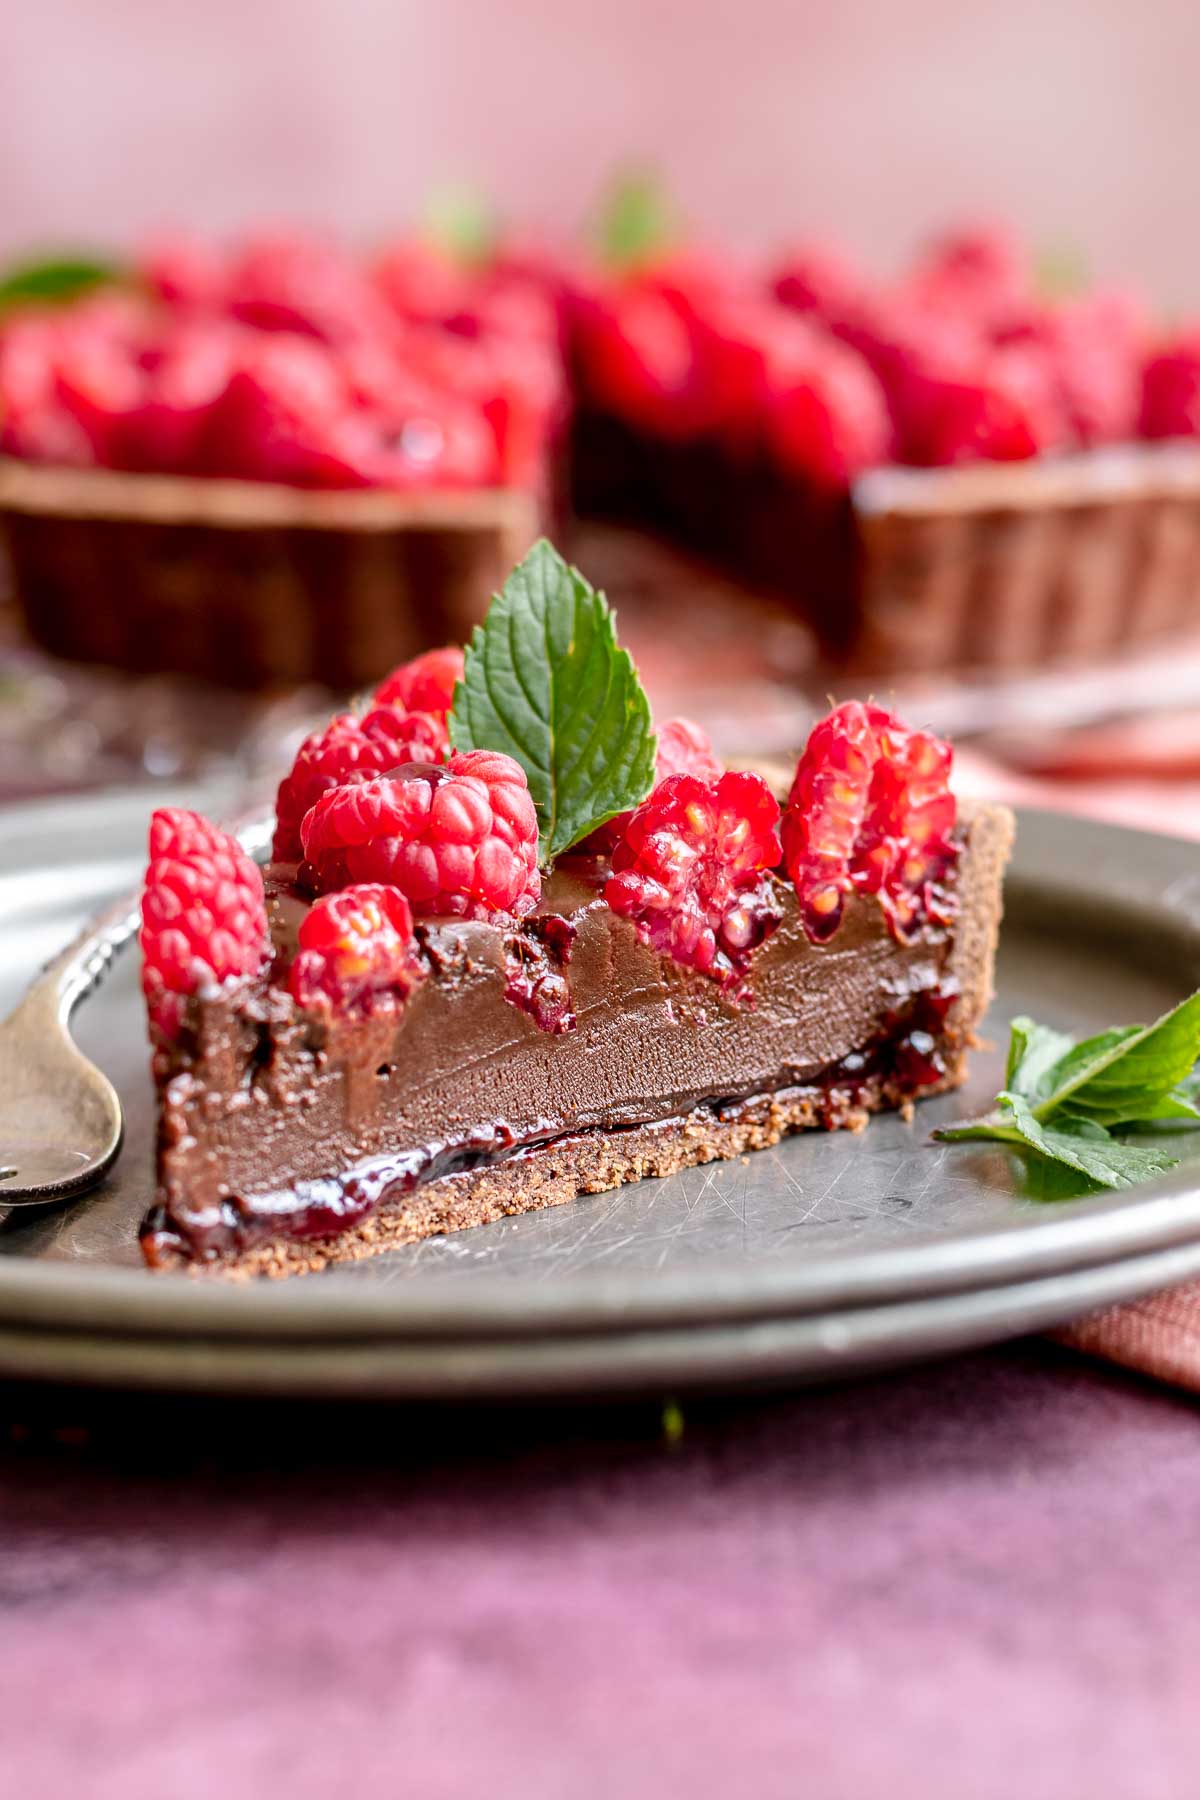 A slice of chocolate rapsberry tart on plater.